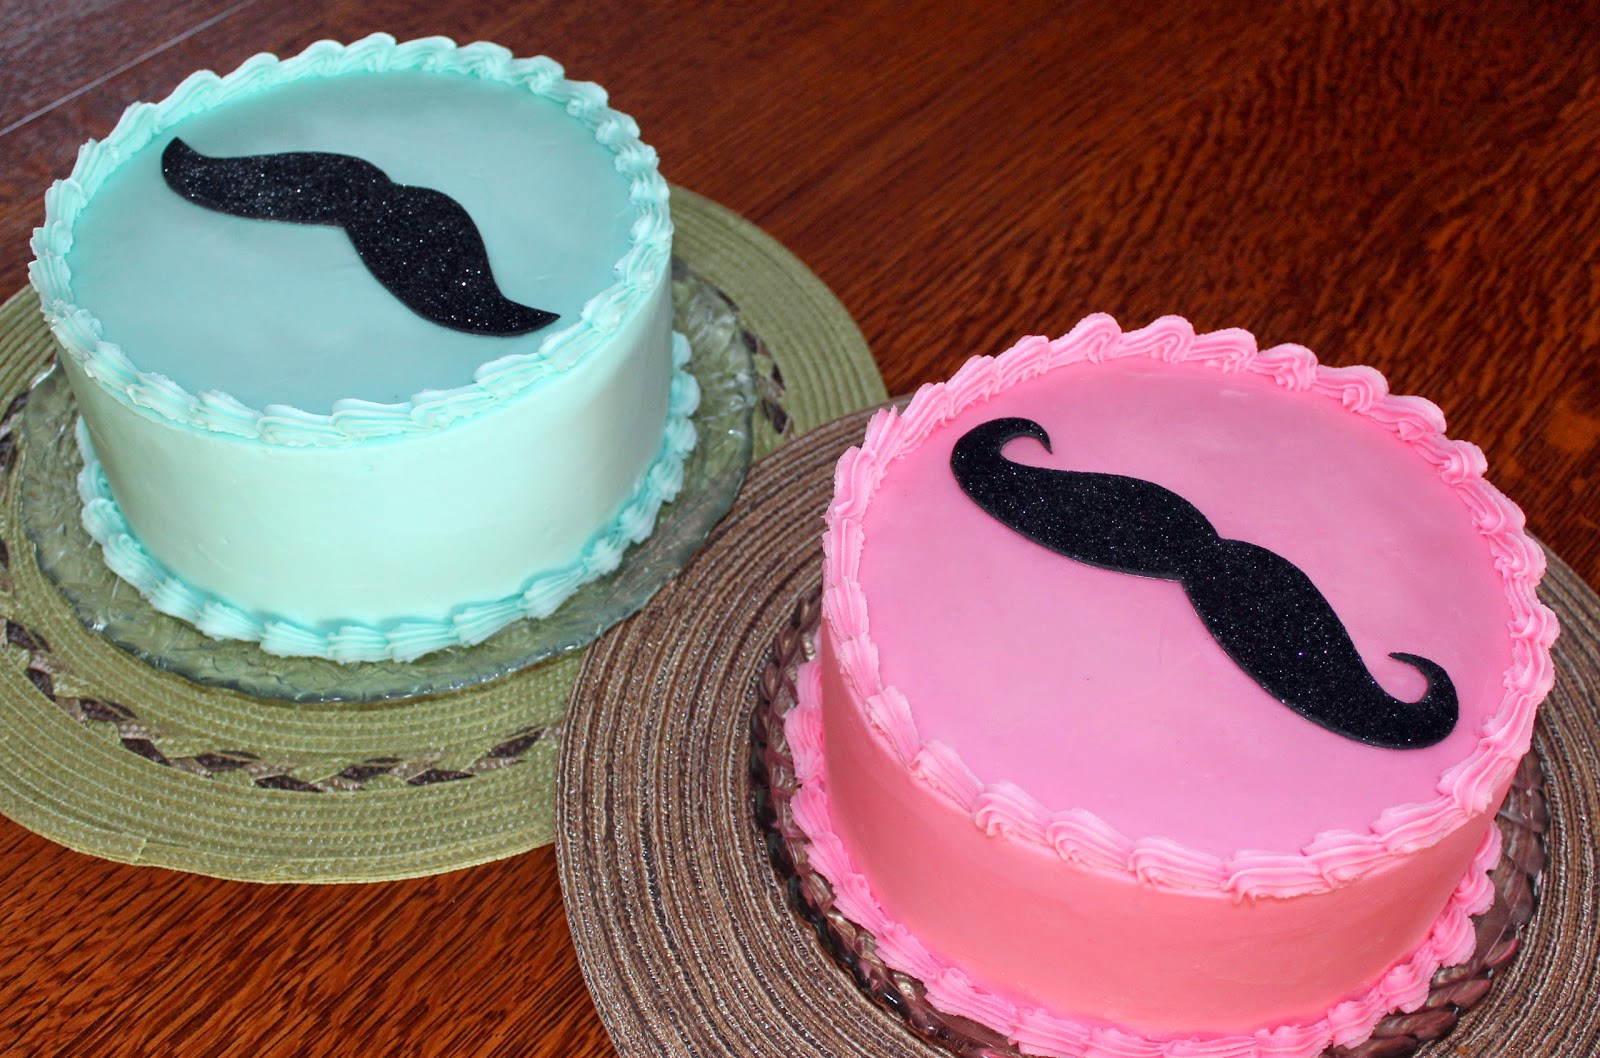 Mustache Birthday Cakes
 The Simple Cake Mustache Cakes